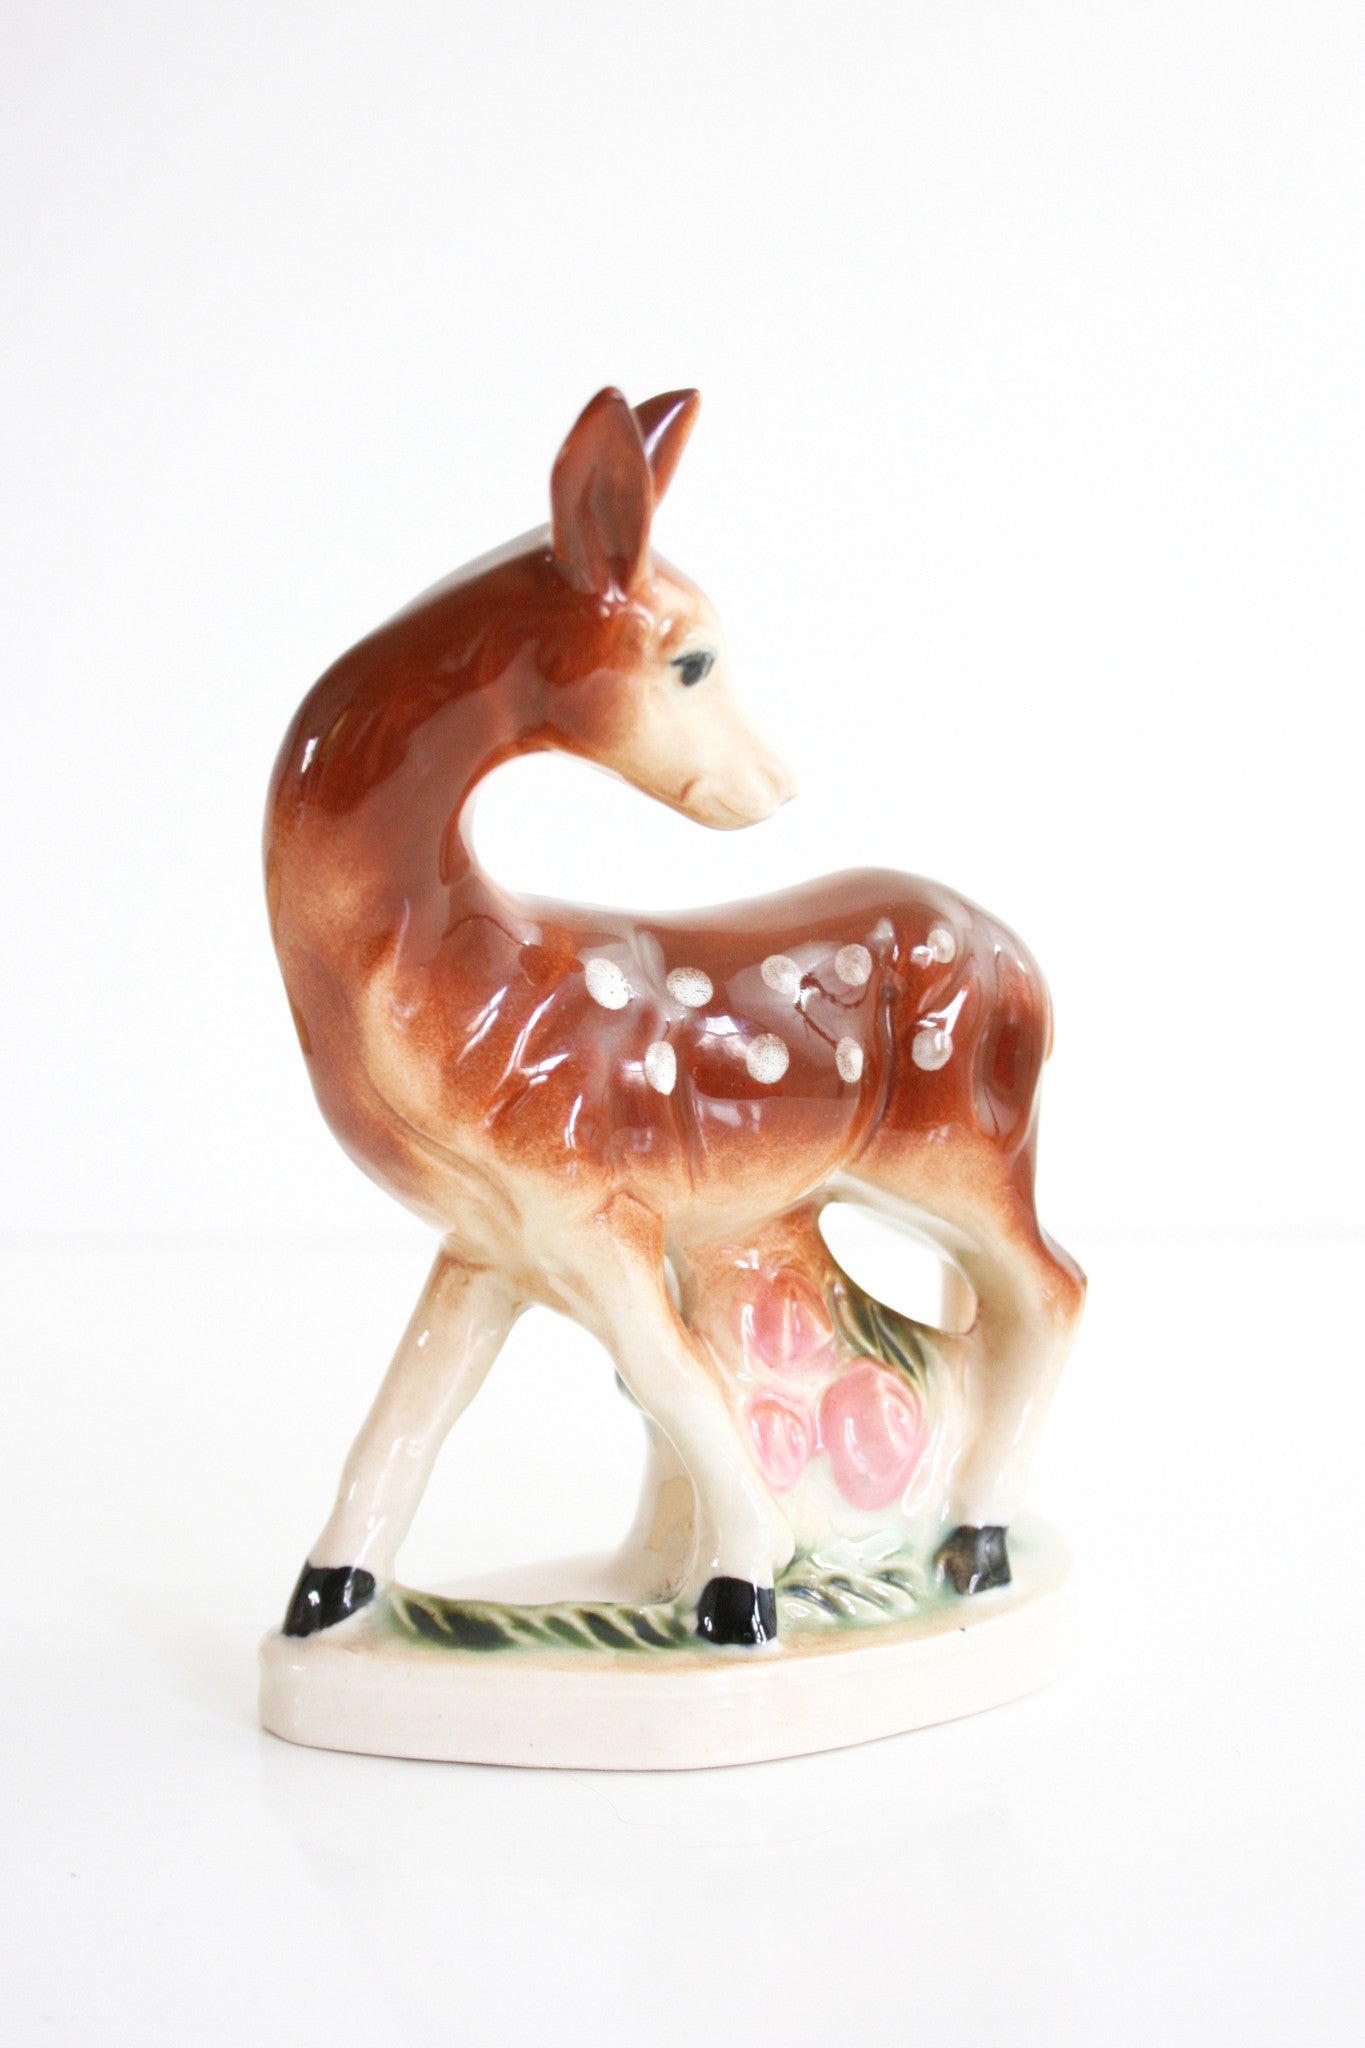 SOLD - Vintage Ceramic Deer Figurine from Japan